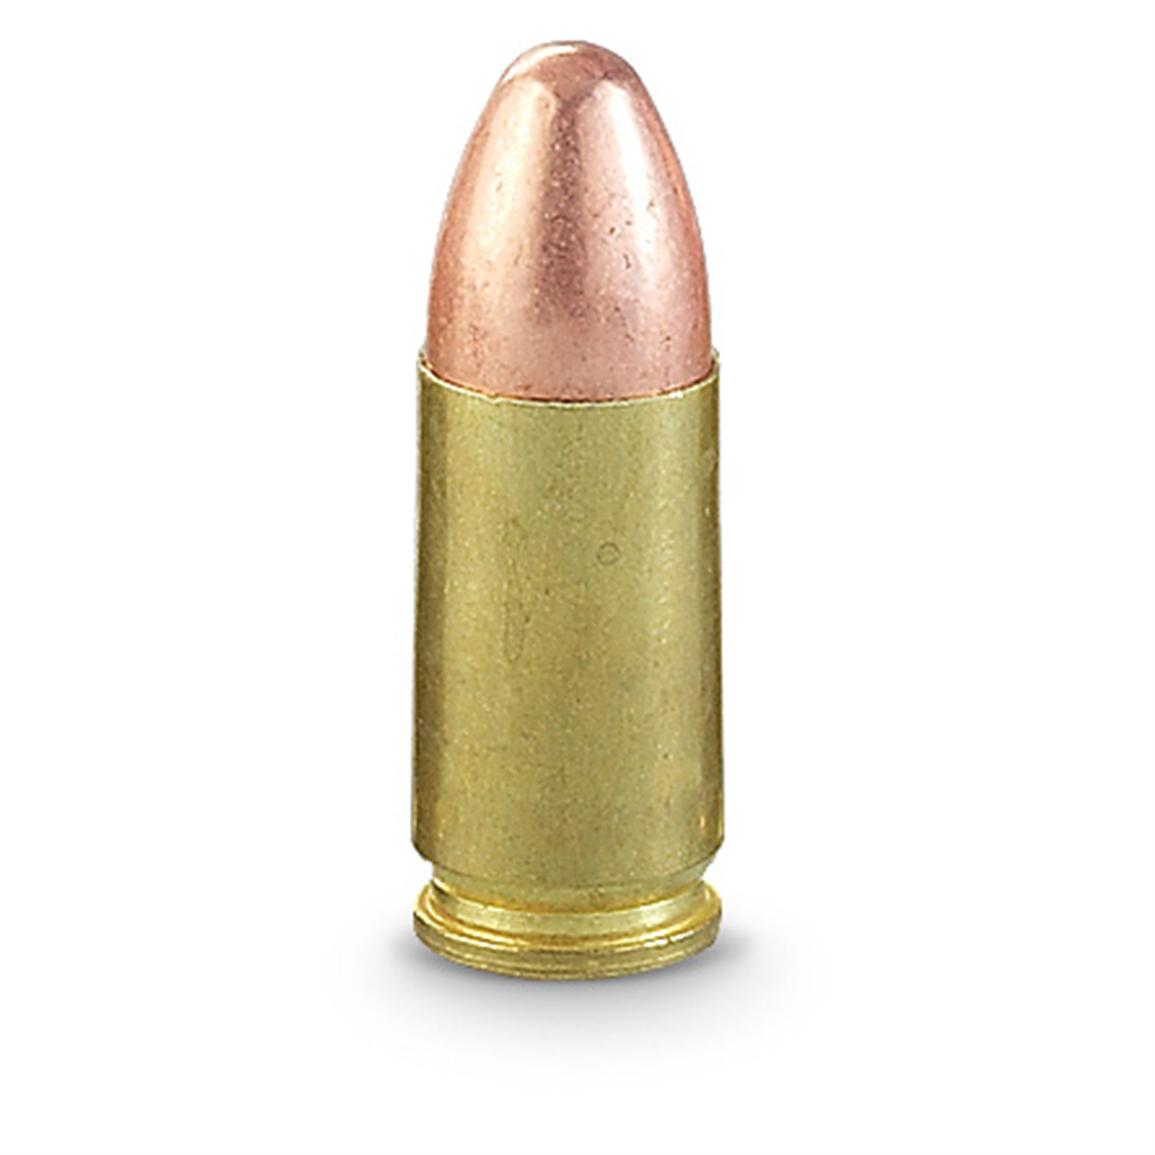 cci-blazer-brass-9mm-fmj-rn-115-grain-50-rounds-92639-9mm-ammo